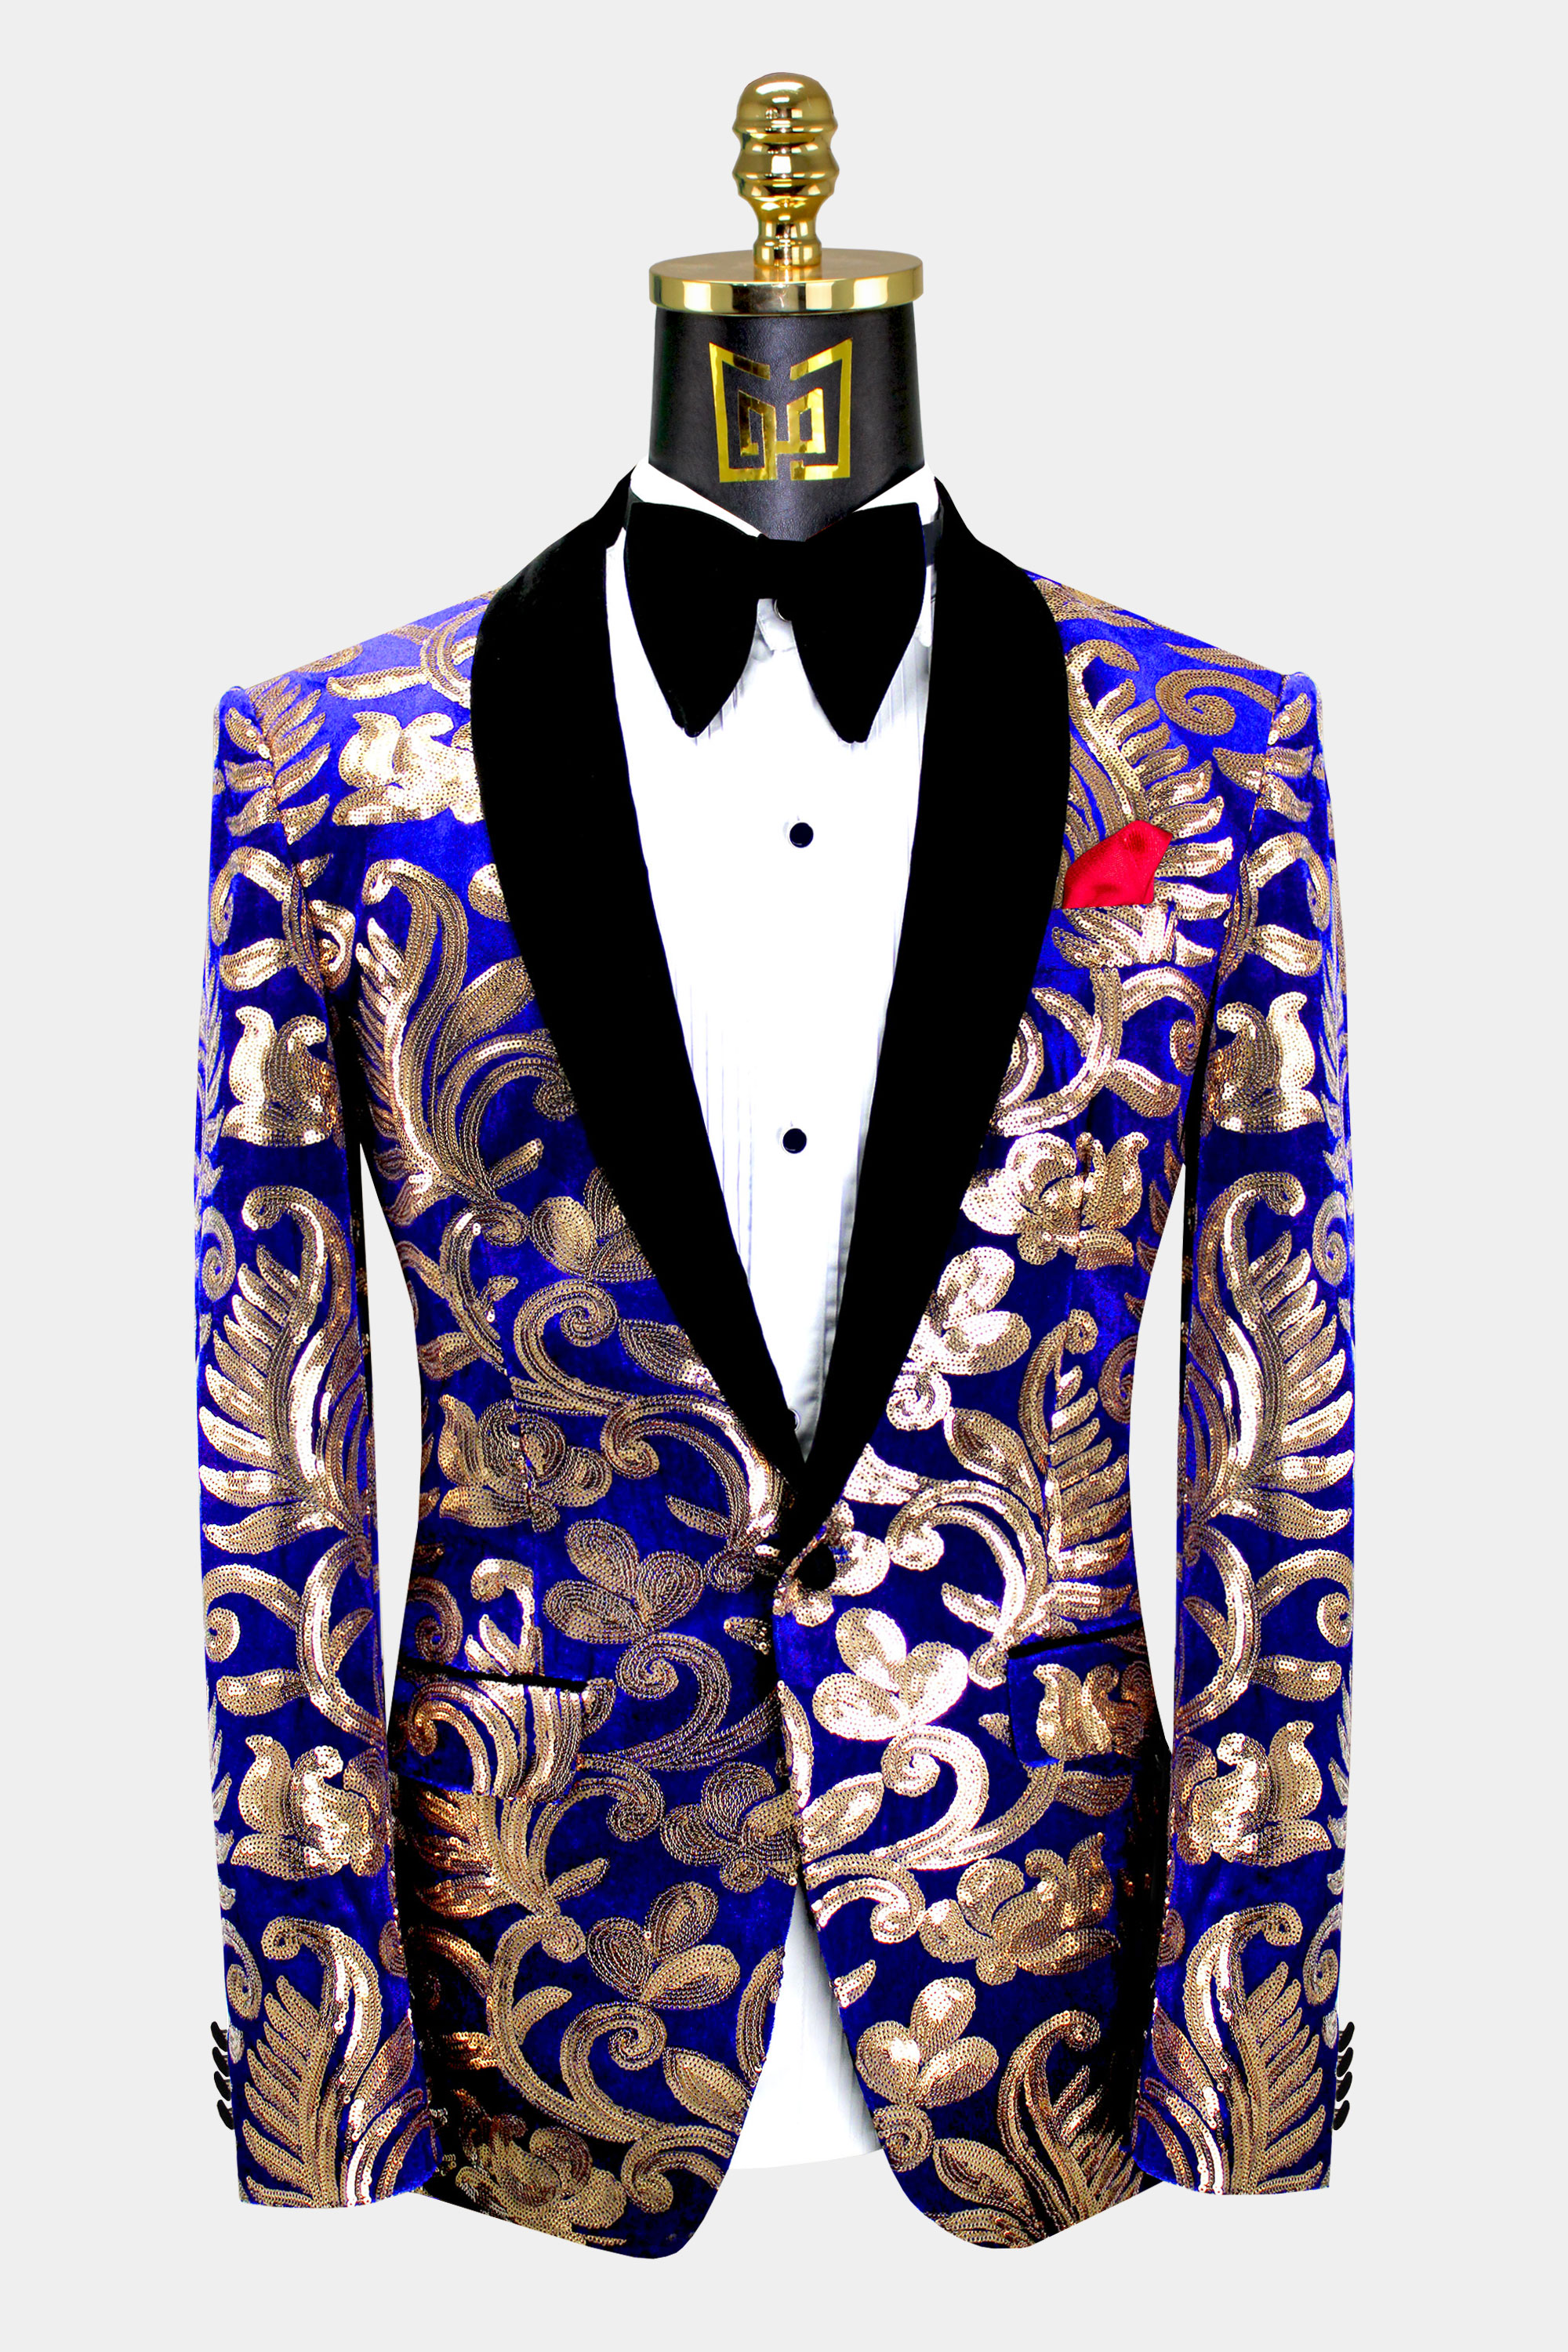 Mens-Royal-Blue-and-Gold-Tuxedo-Jacket-Prom-Suit-Blazer-from-Gentlemansguru.com